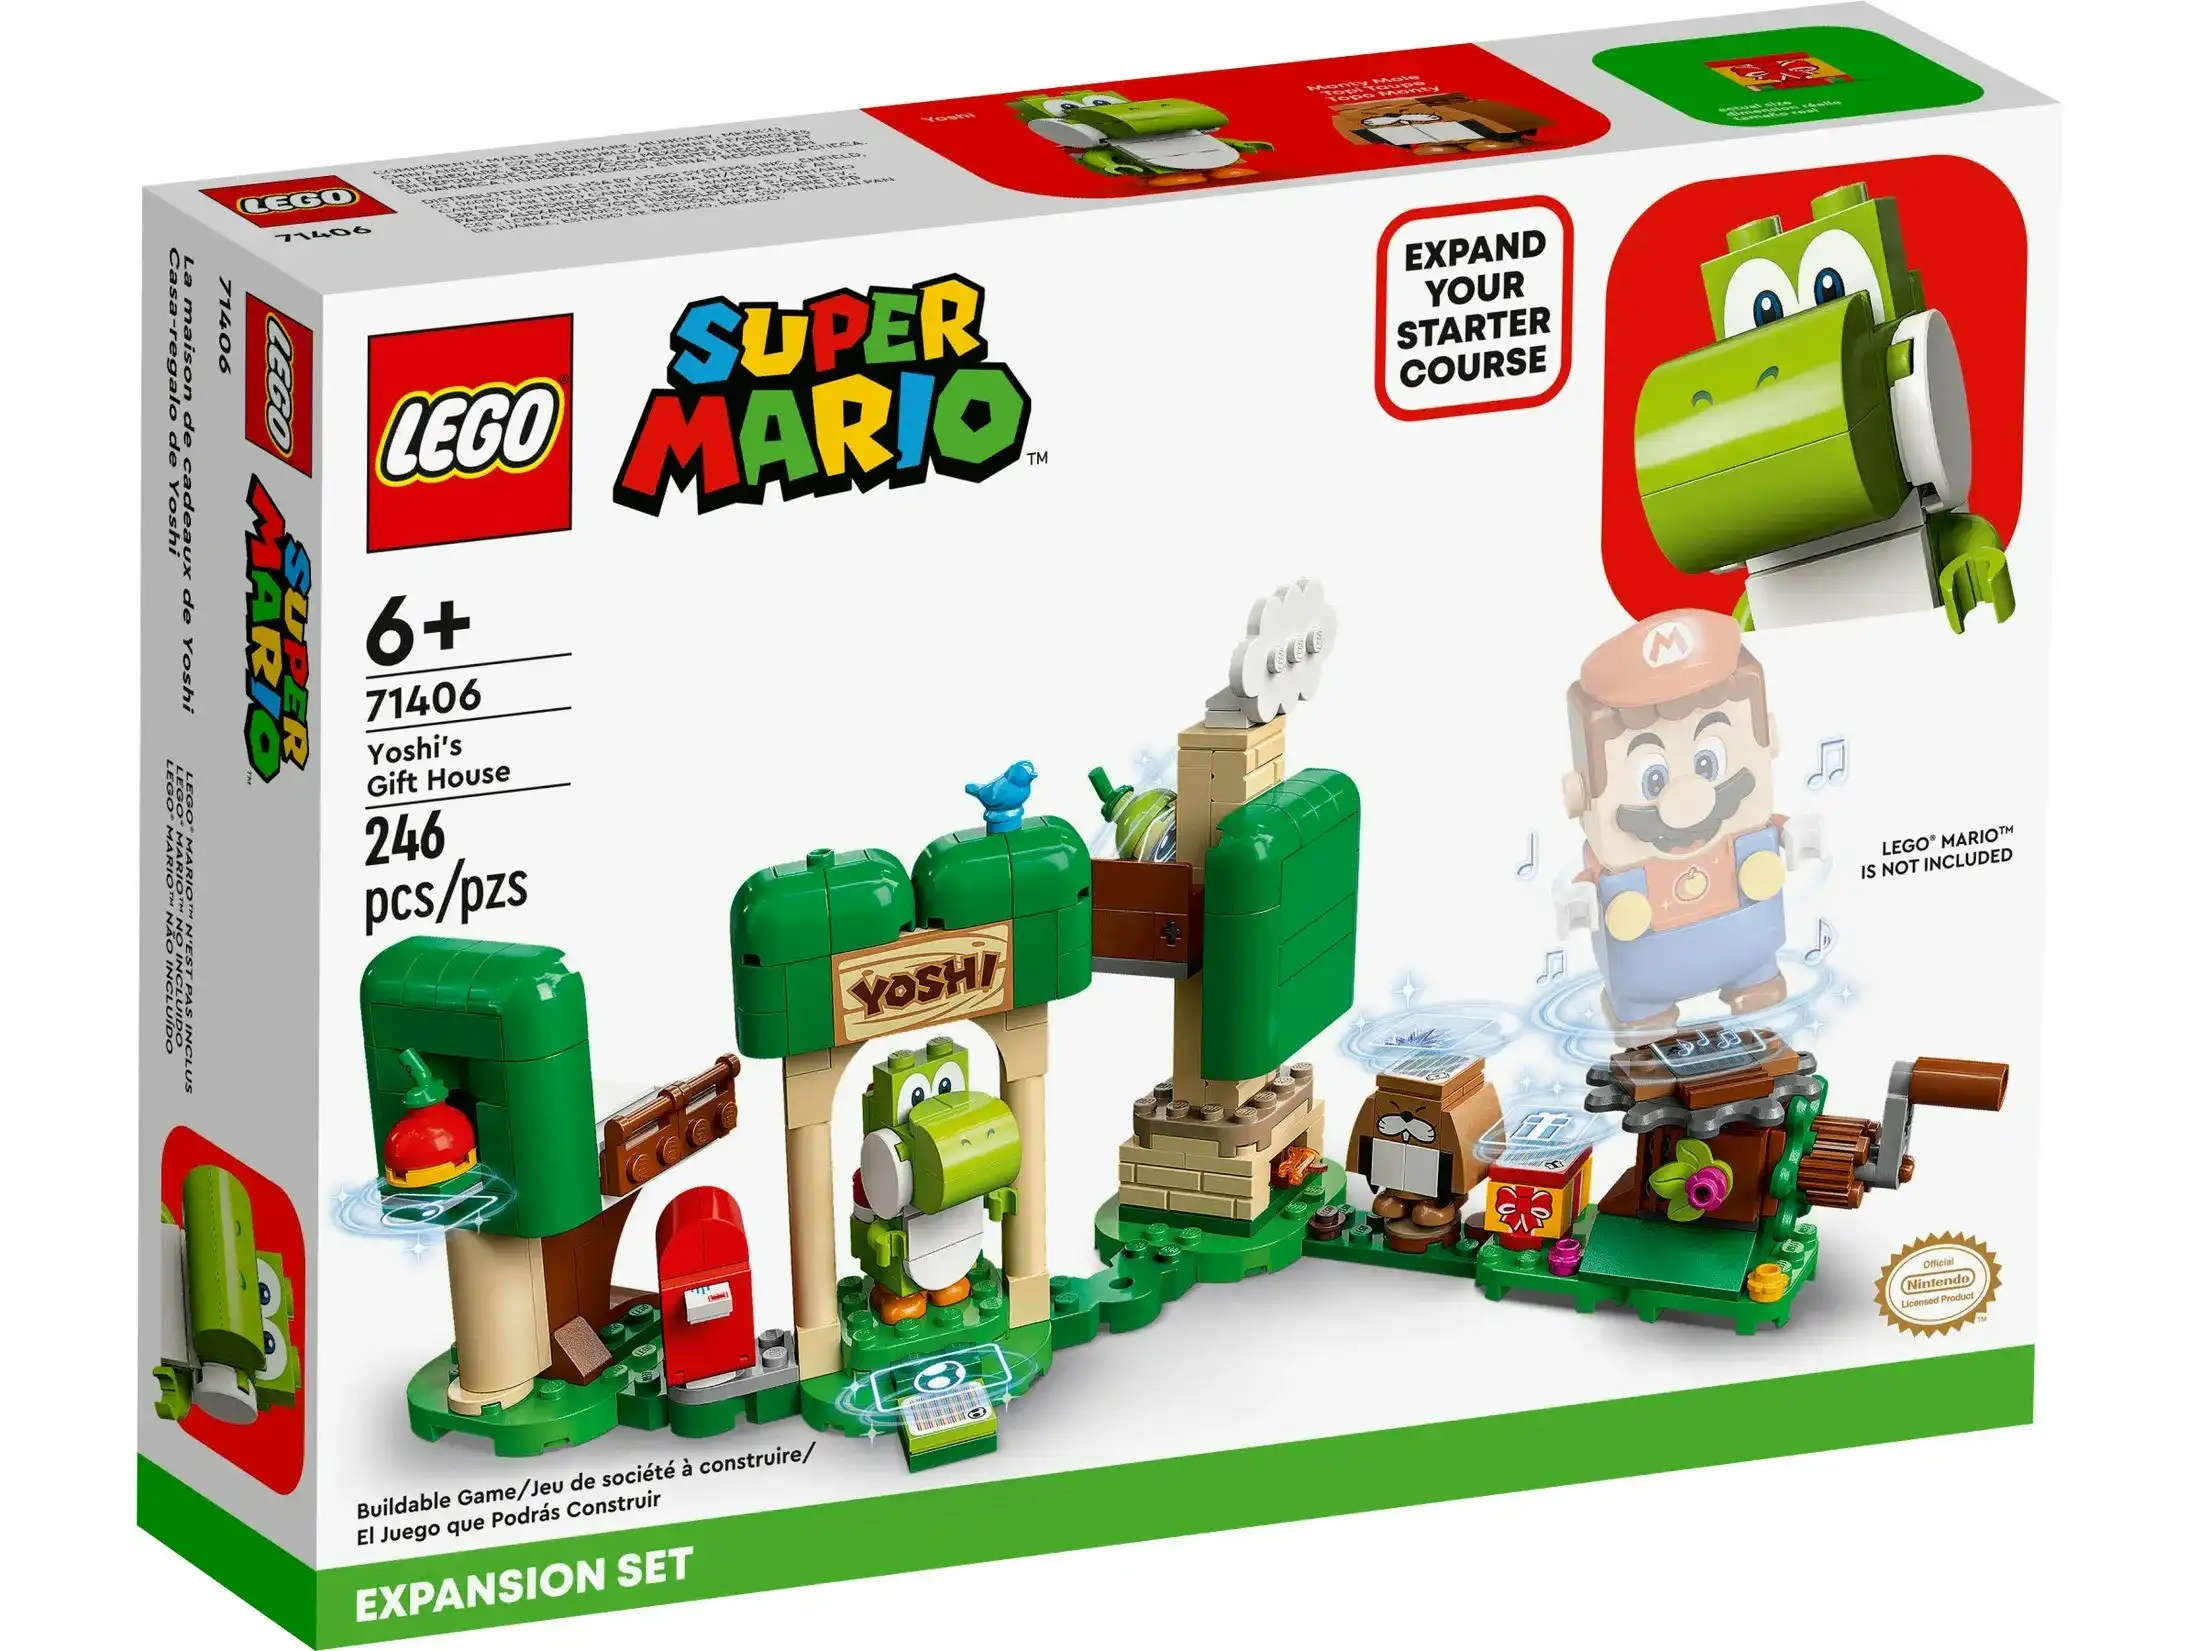 LEGO 71406 Yoshi’s Gift House Expansion Set - Super Mario